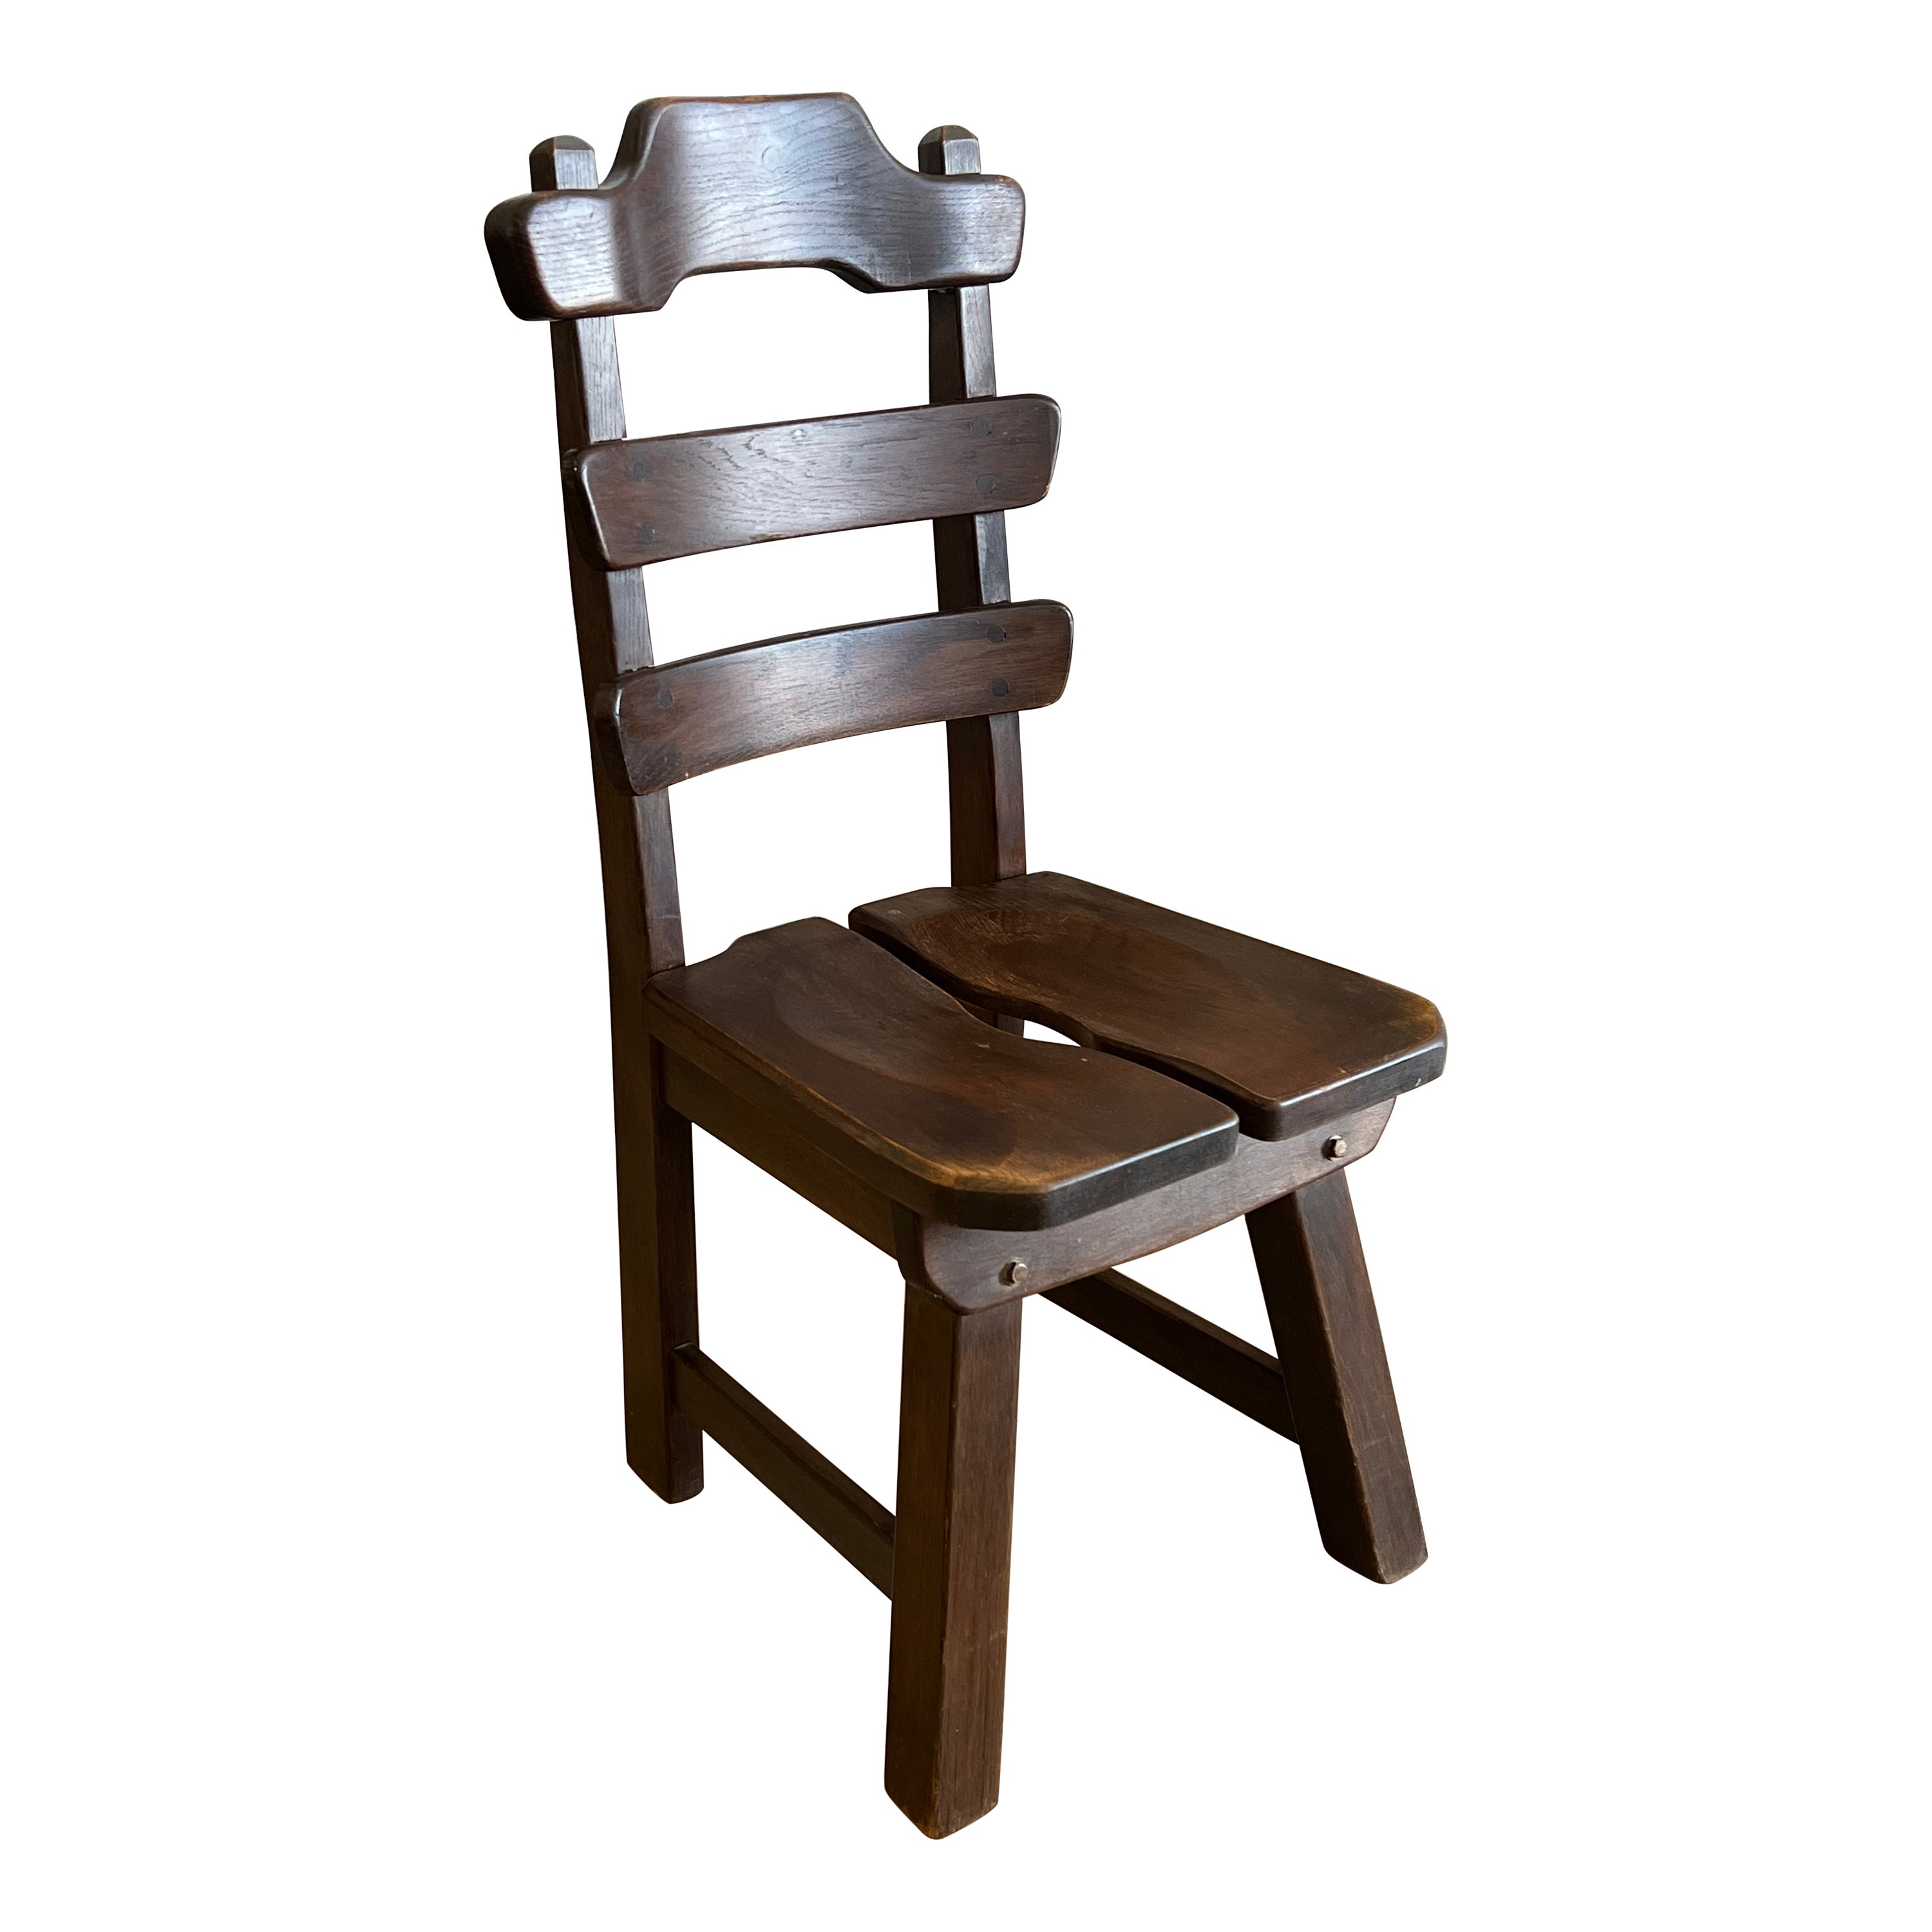 1960’s Brutalist Dutch Oak Chair, 6 Chairs Available